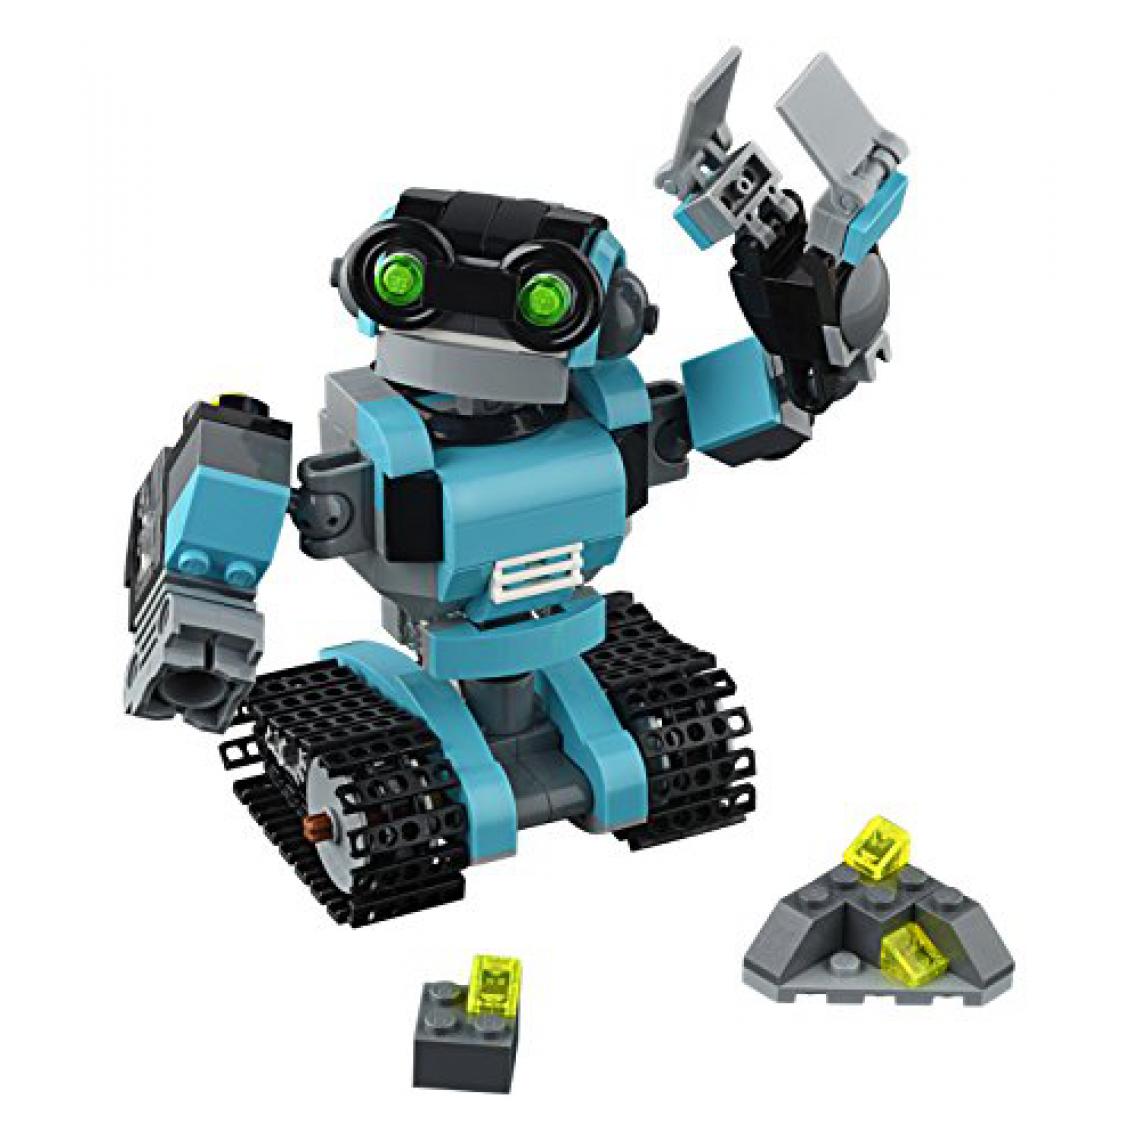 Lego - Robot Jouet LEgO Creator Robo Explorer 31062 - Briques et blocs